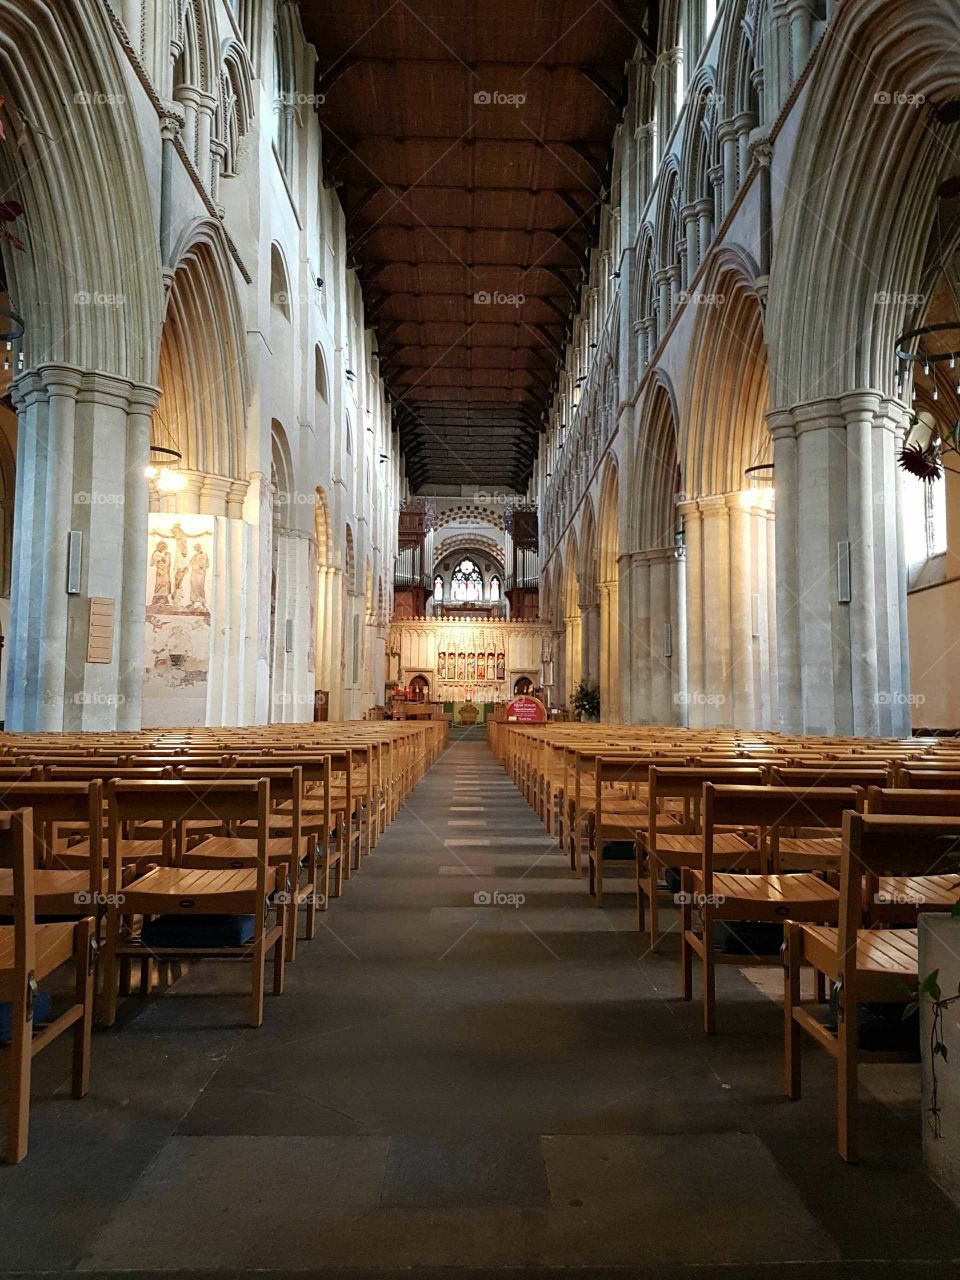 Cathedral in Hemel Hempstead England